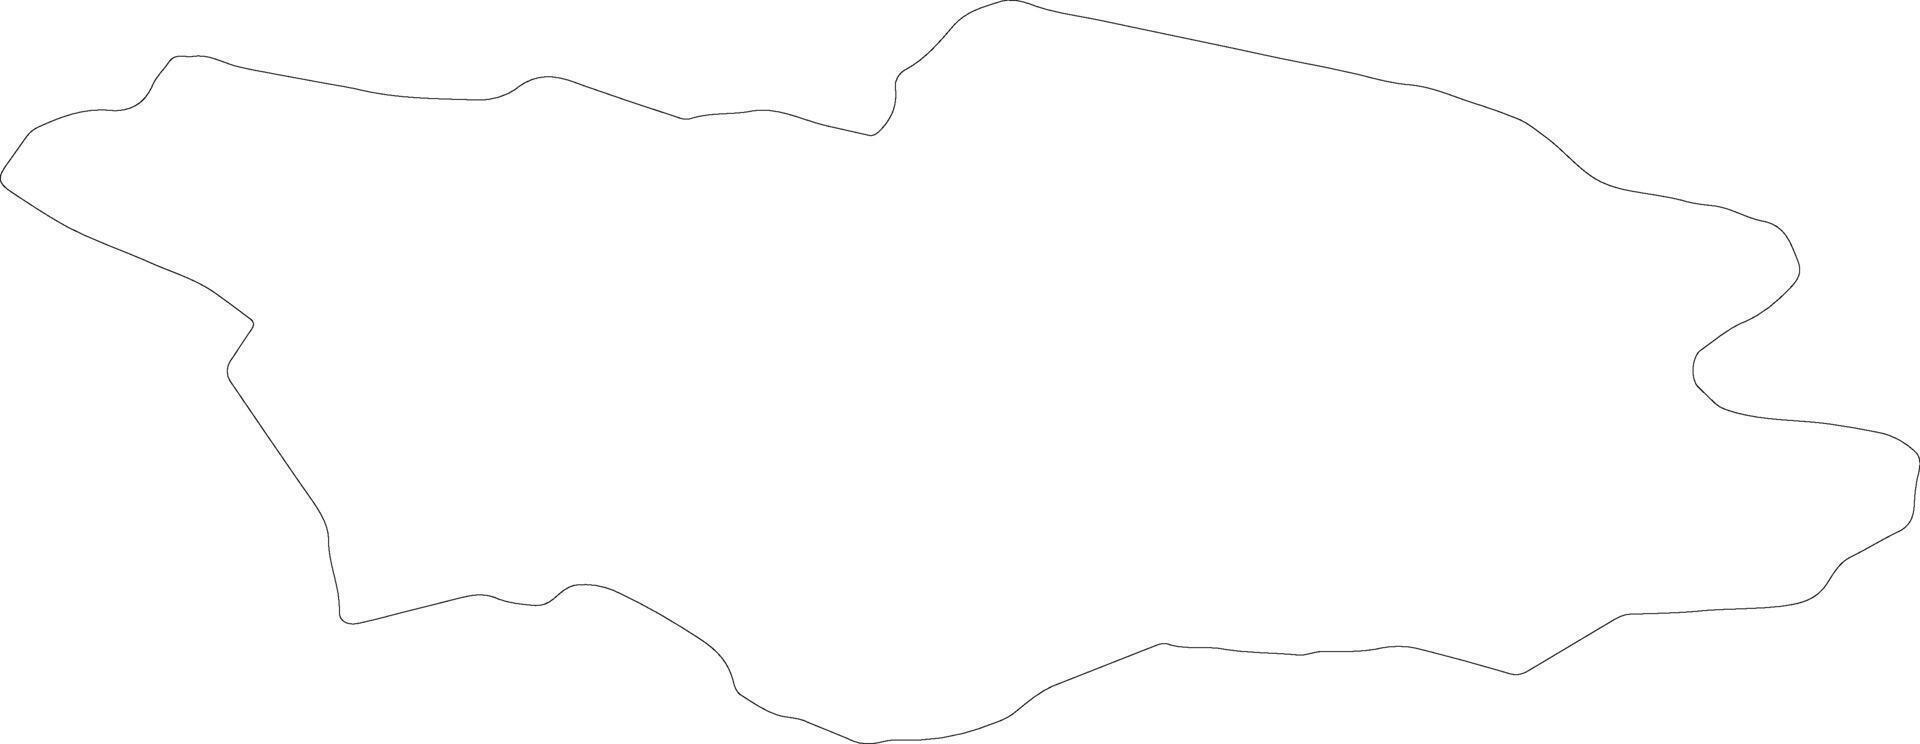 racha-lechkhumi-kvemo svaneti Georgia contorno mapa vector